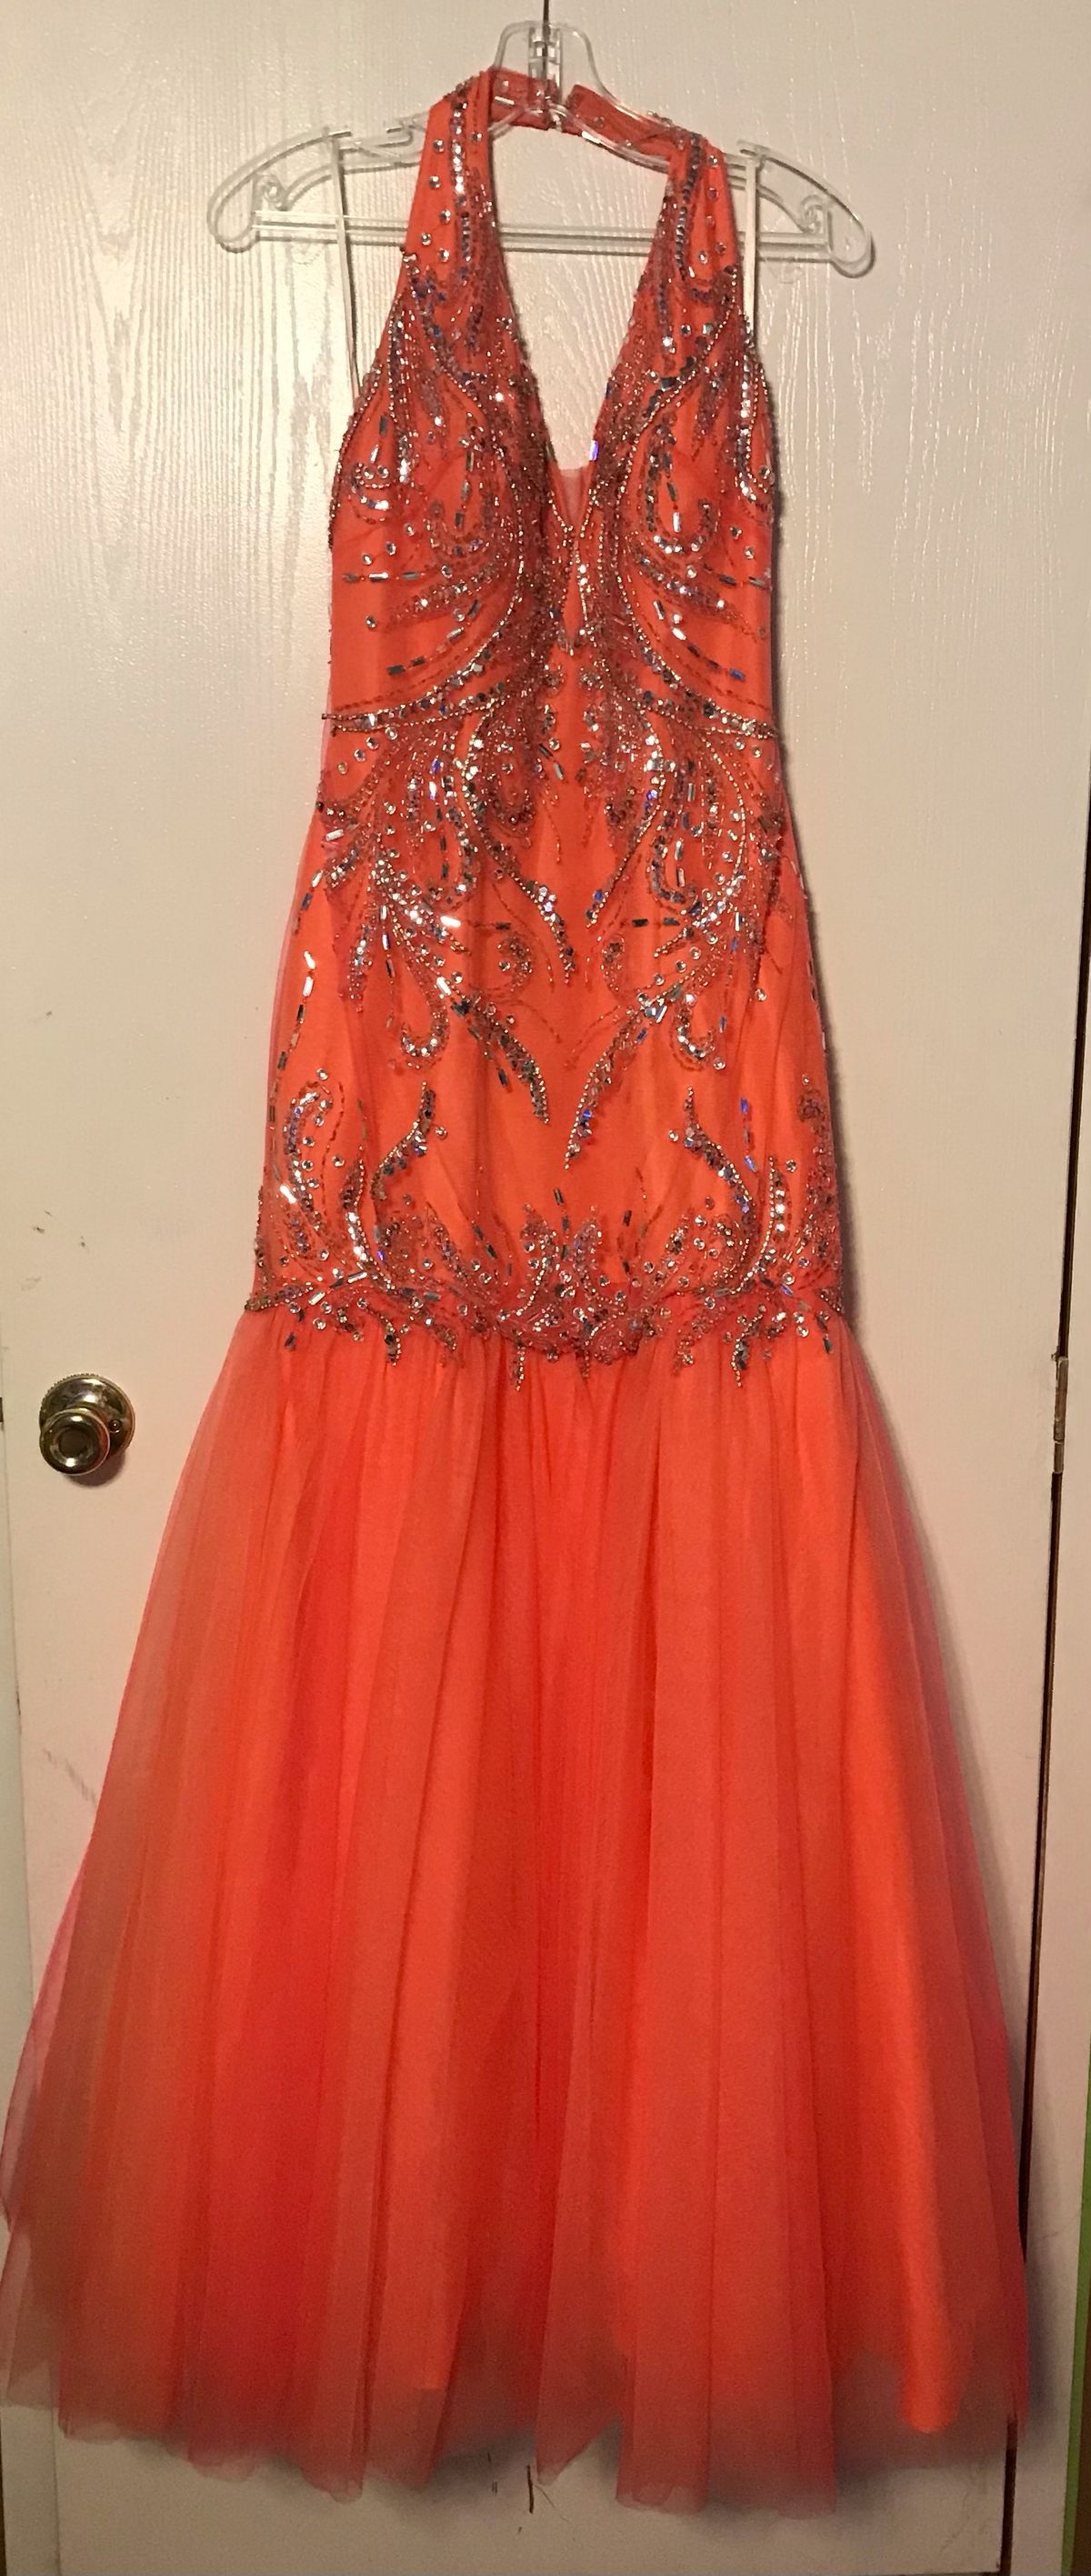 Size 10 Prom Orange Mermaid Dress on Queenly